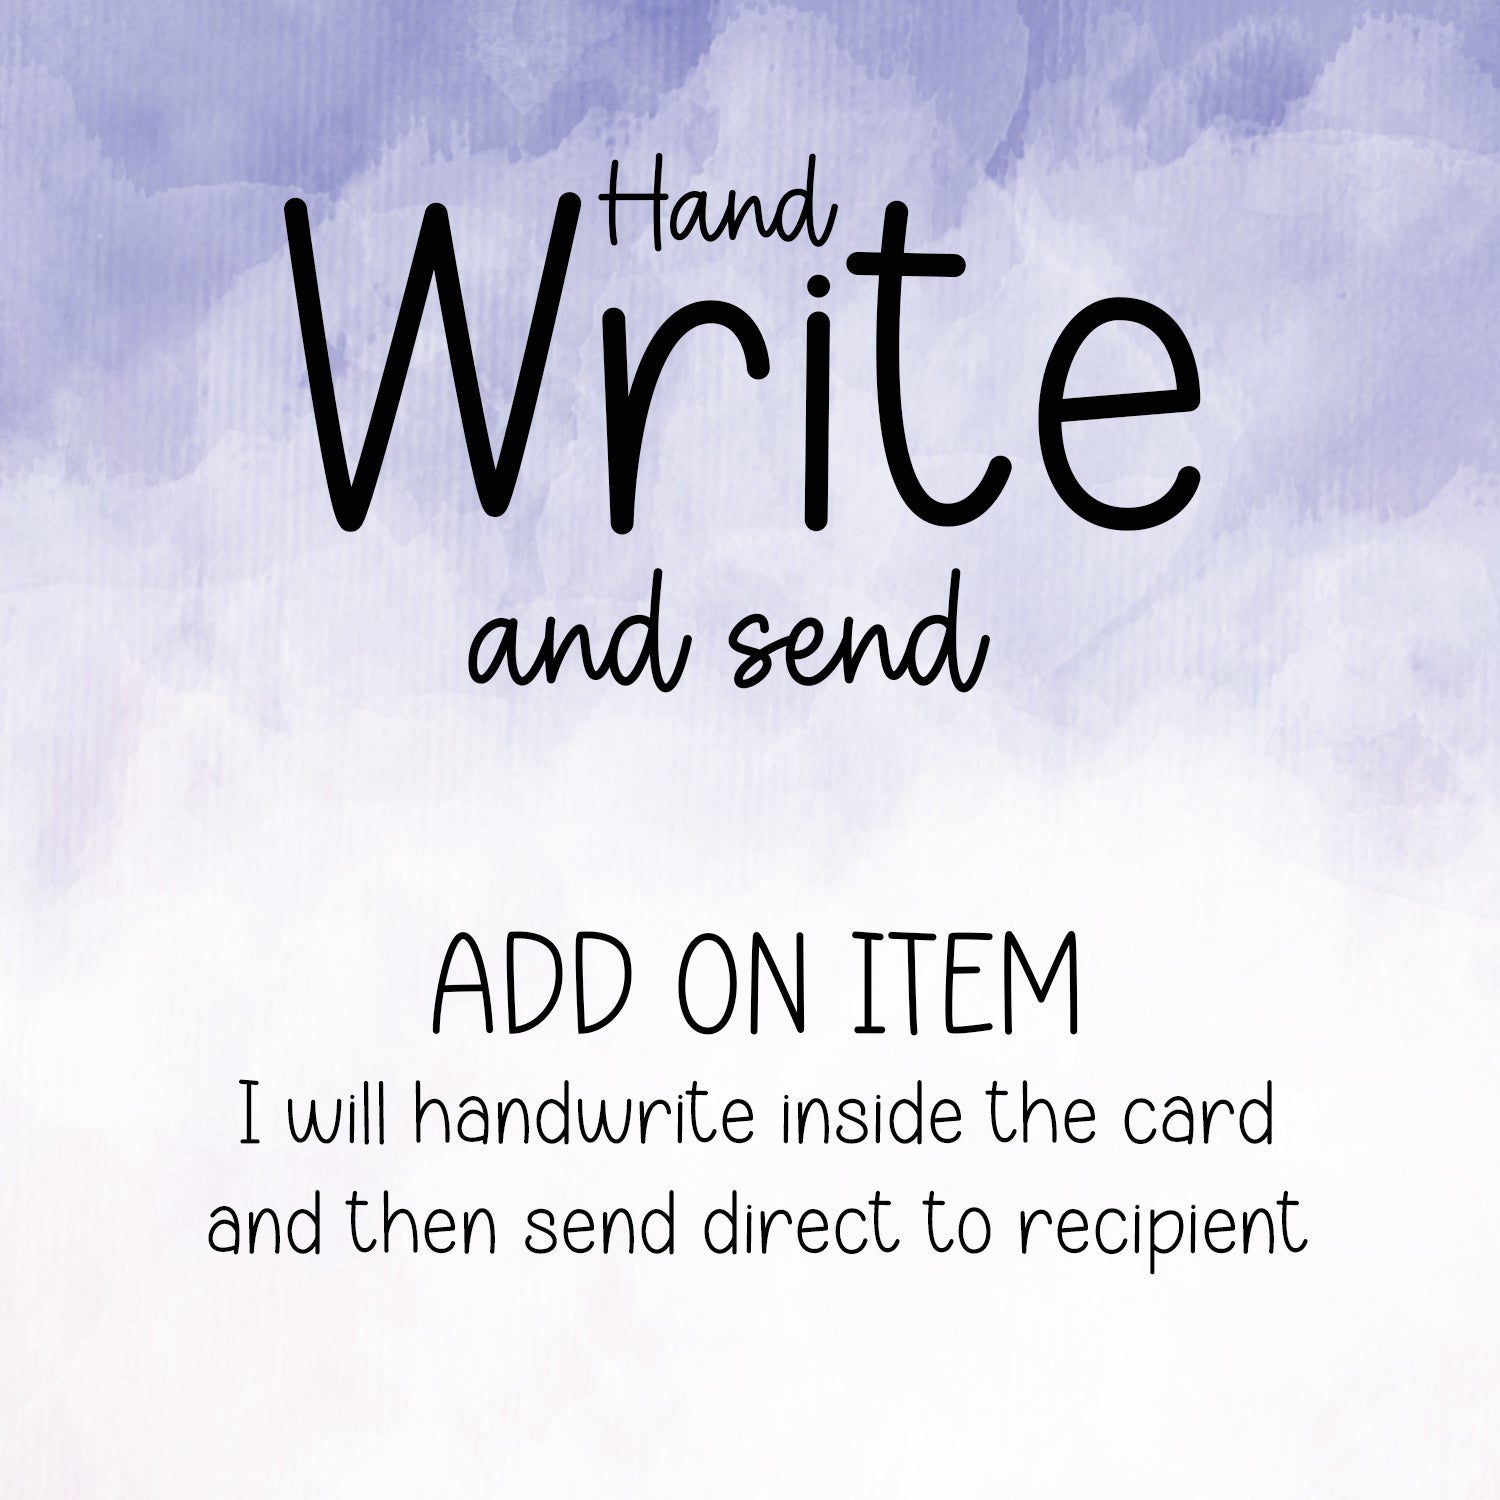 Write and Send Service - Add on Item - Send card direct - 2f75e5-2